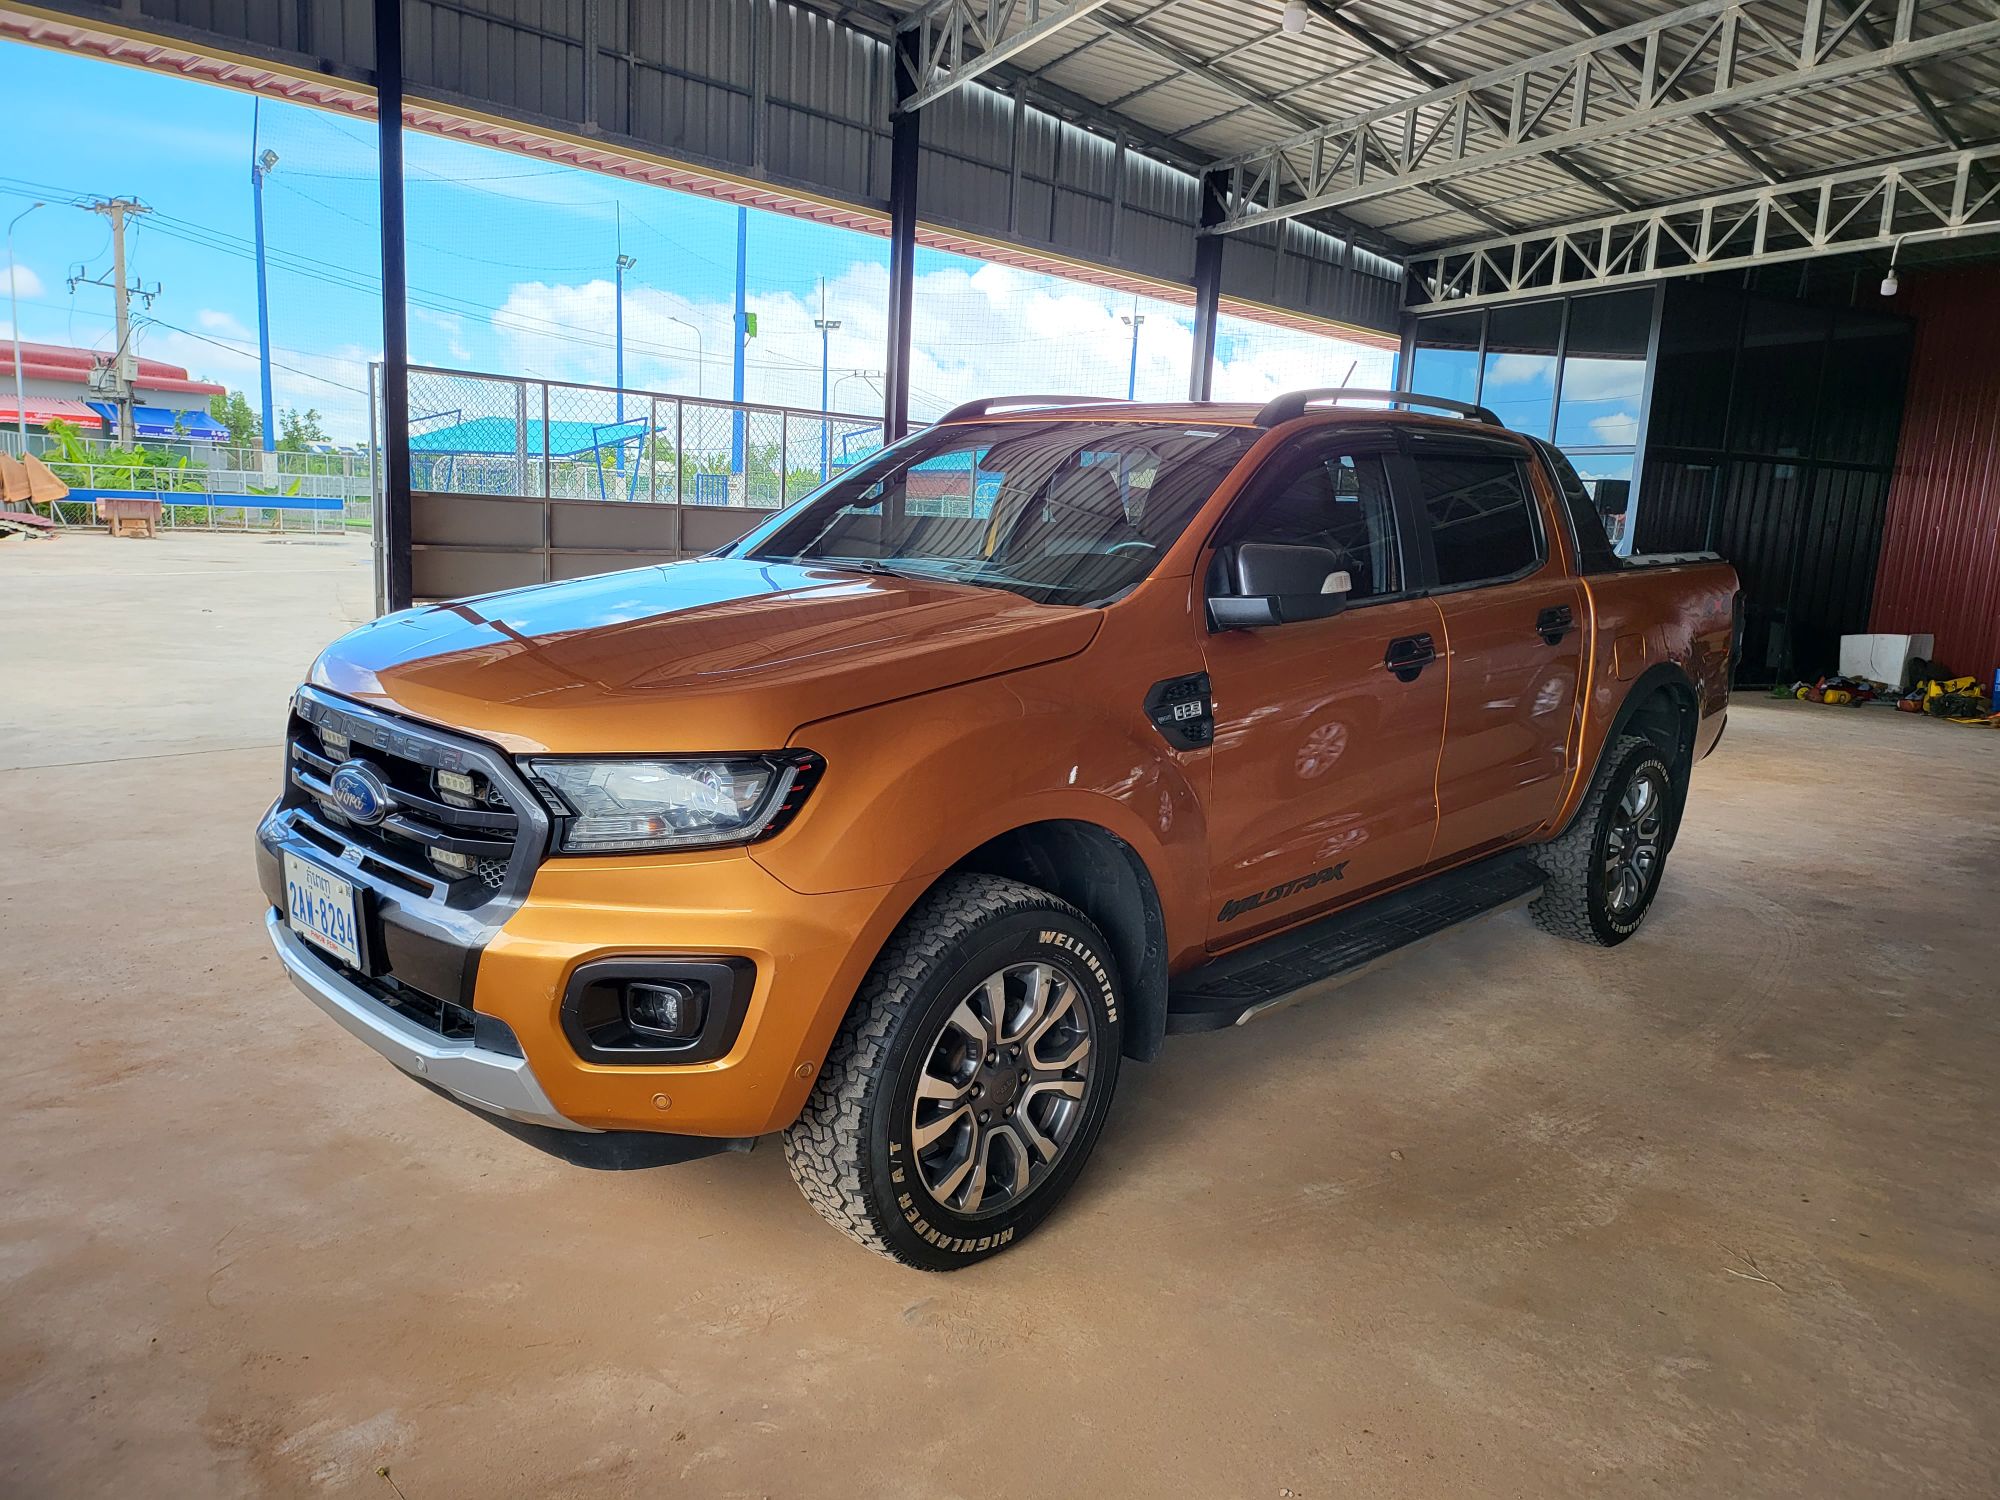 Ford RANGER Wildtrack 2019 66000km